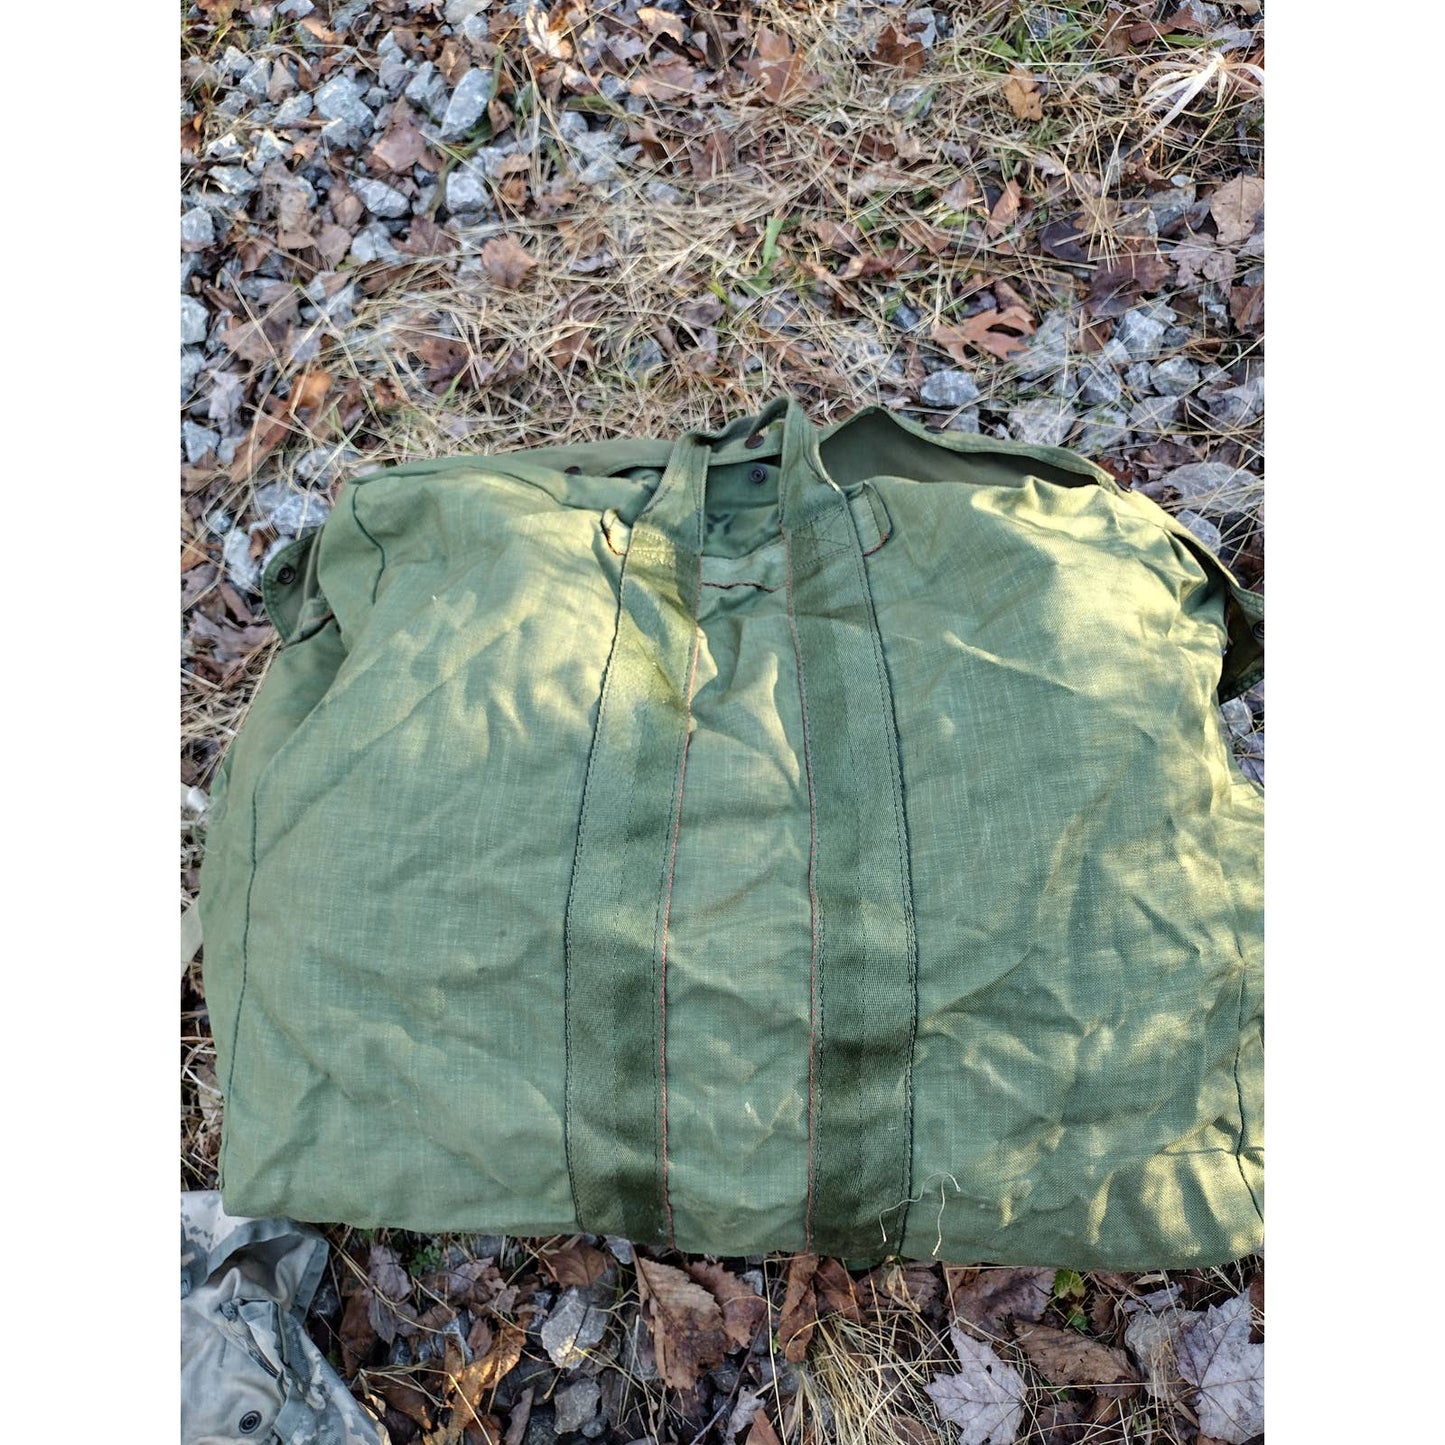 US Military Pilot Kit Duffel Bag | FREE SHIPPING | Military Surplus Army Surplus